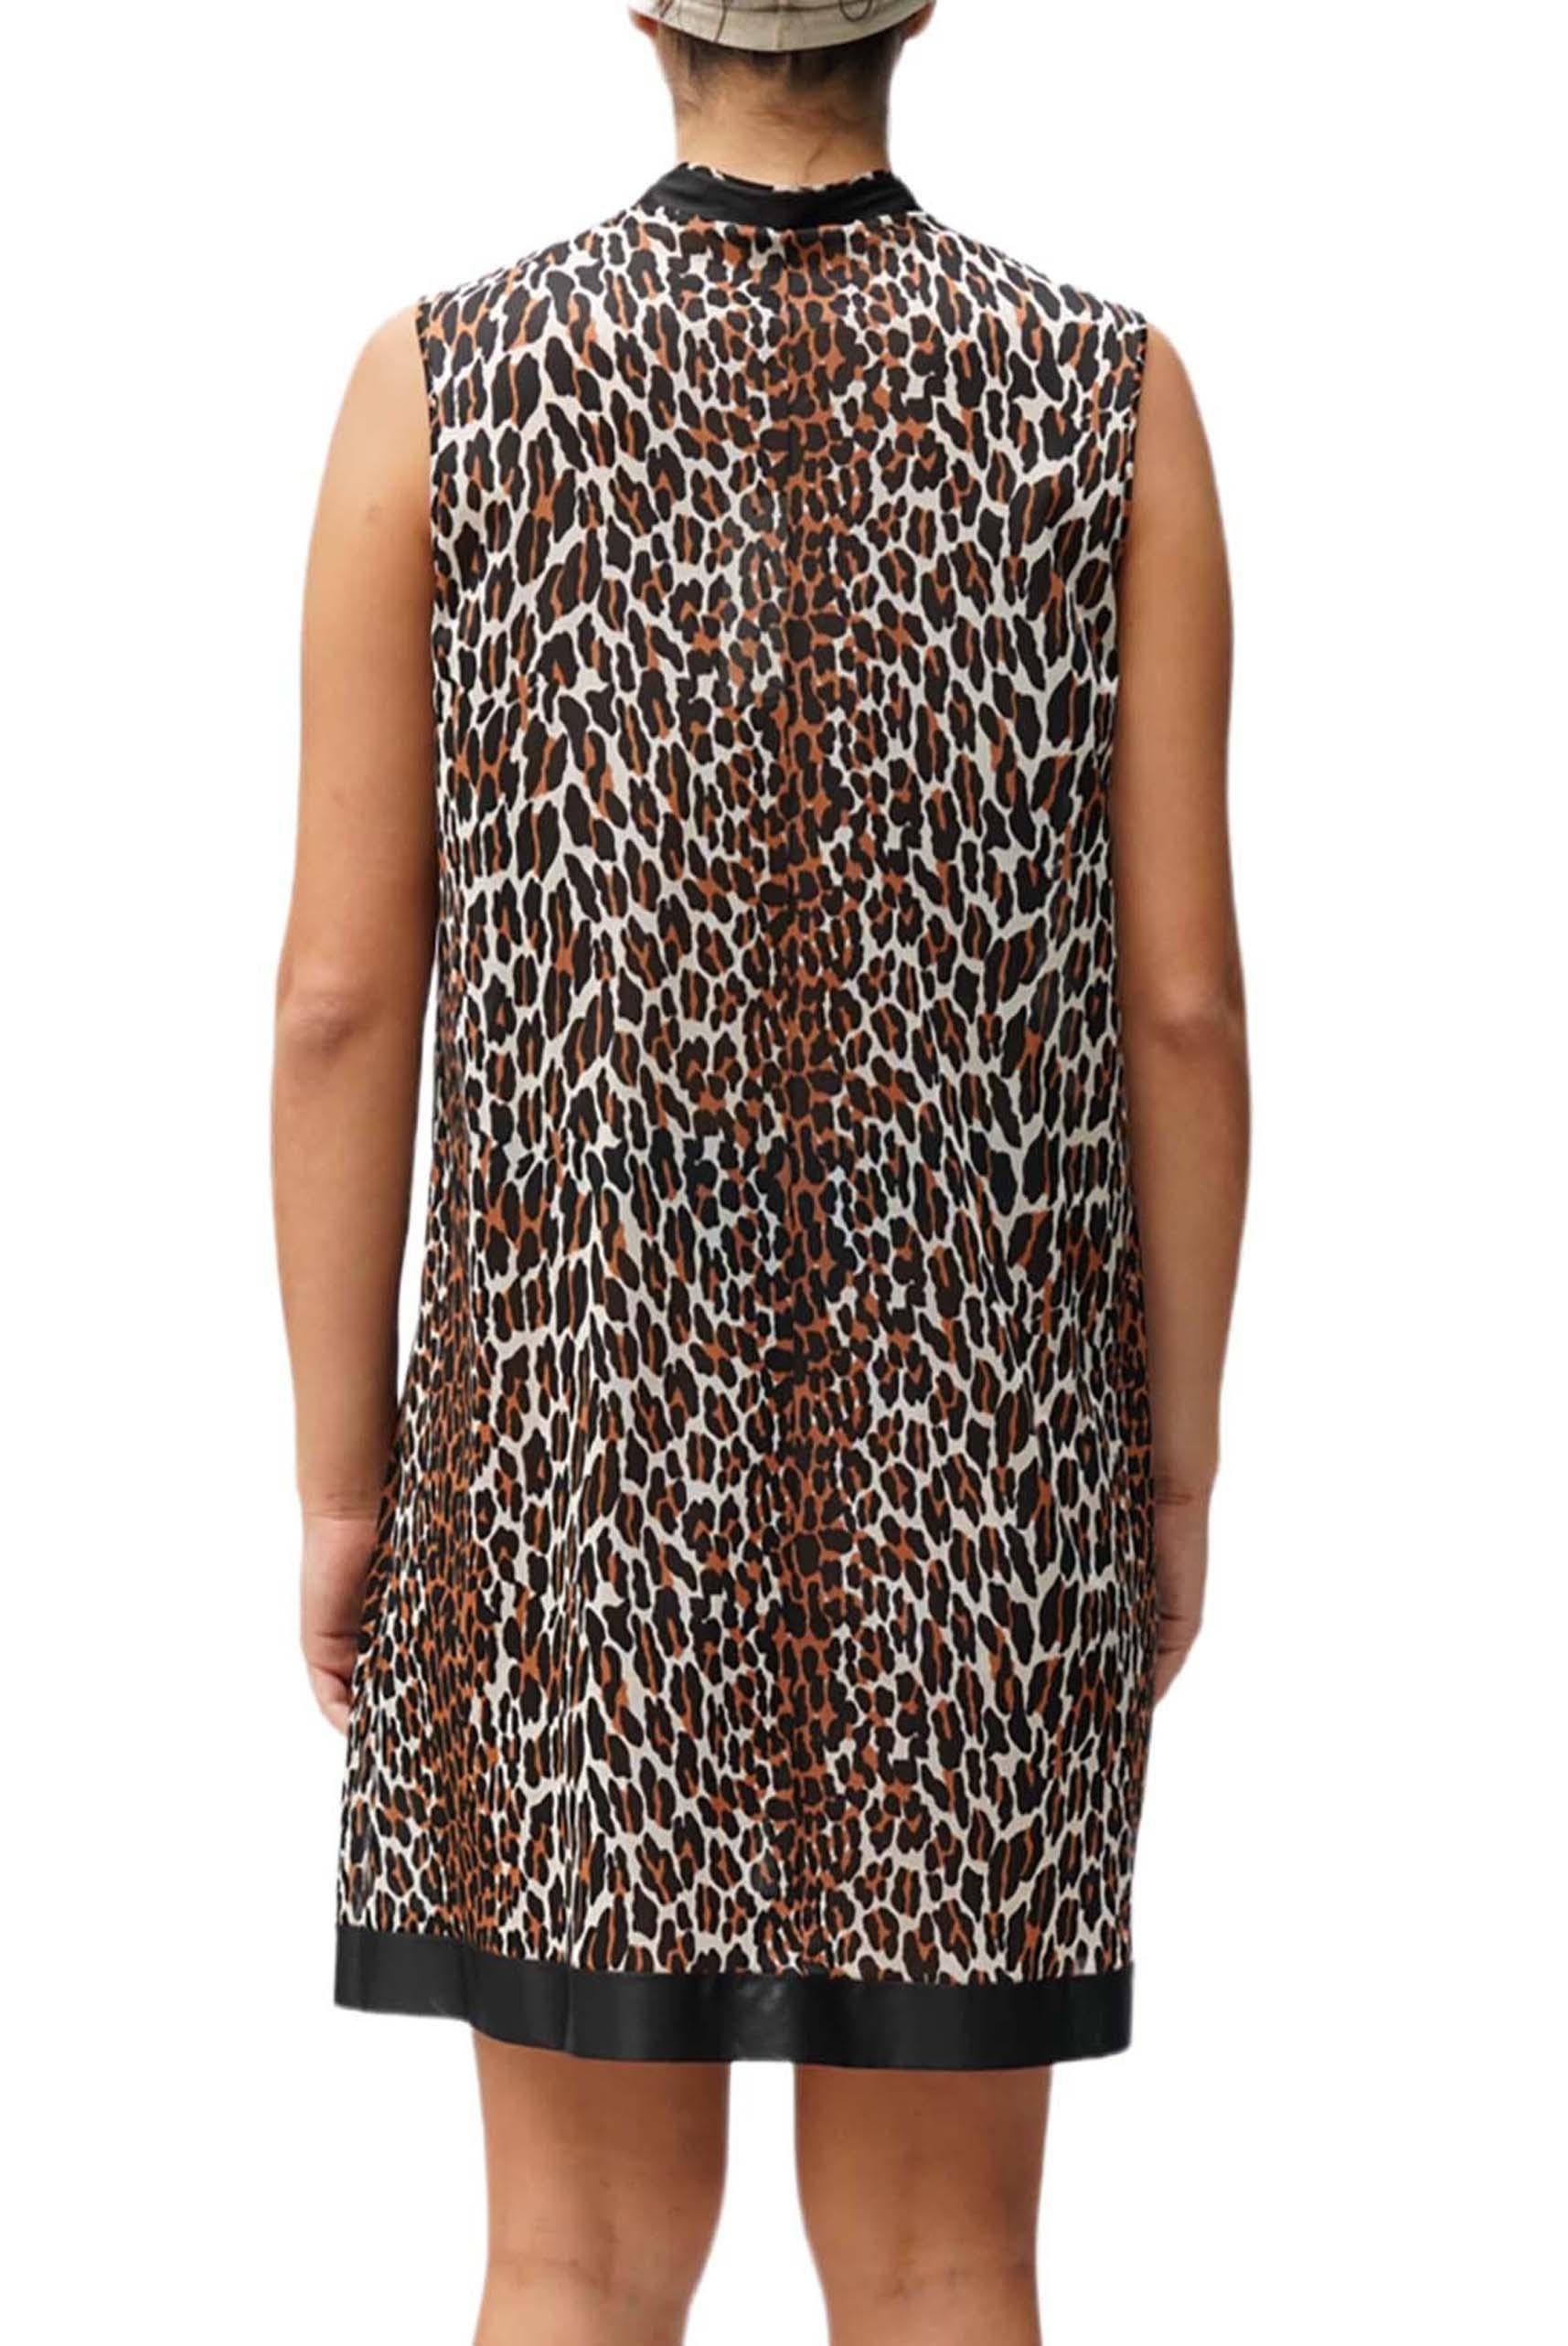 1960S Leopard Print Nylon Tricot Jersey Mod Slip Dress Negligee For Sale 3